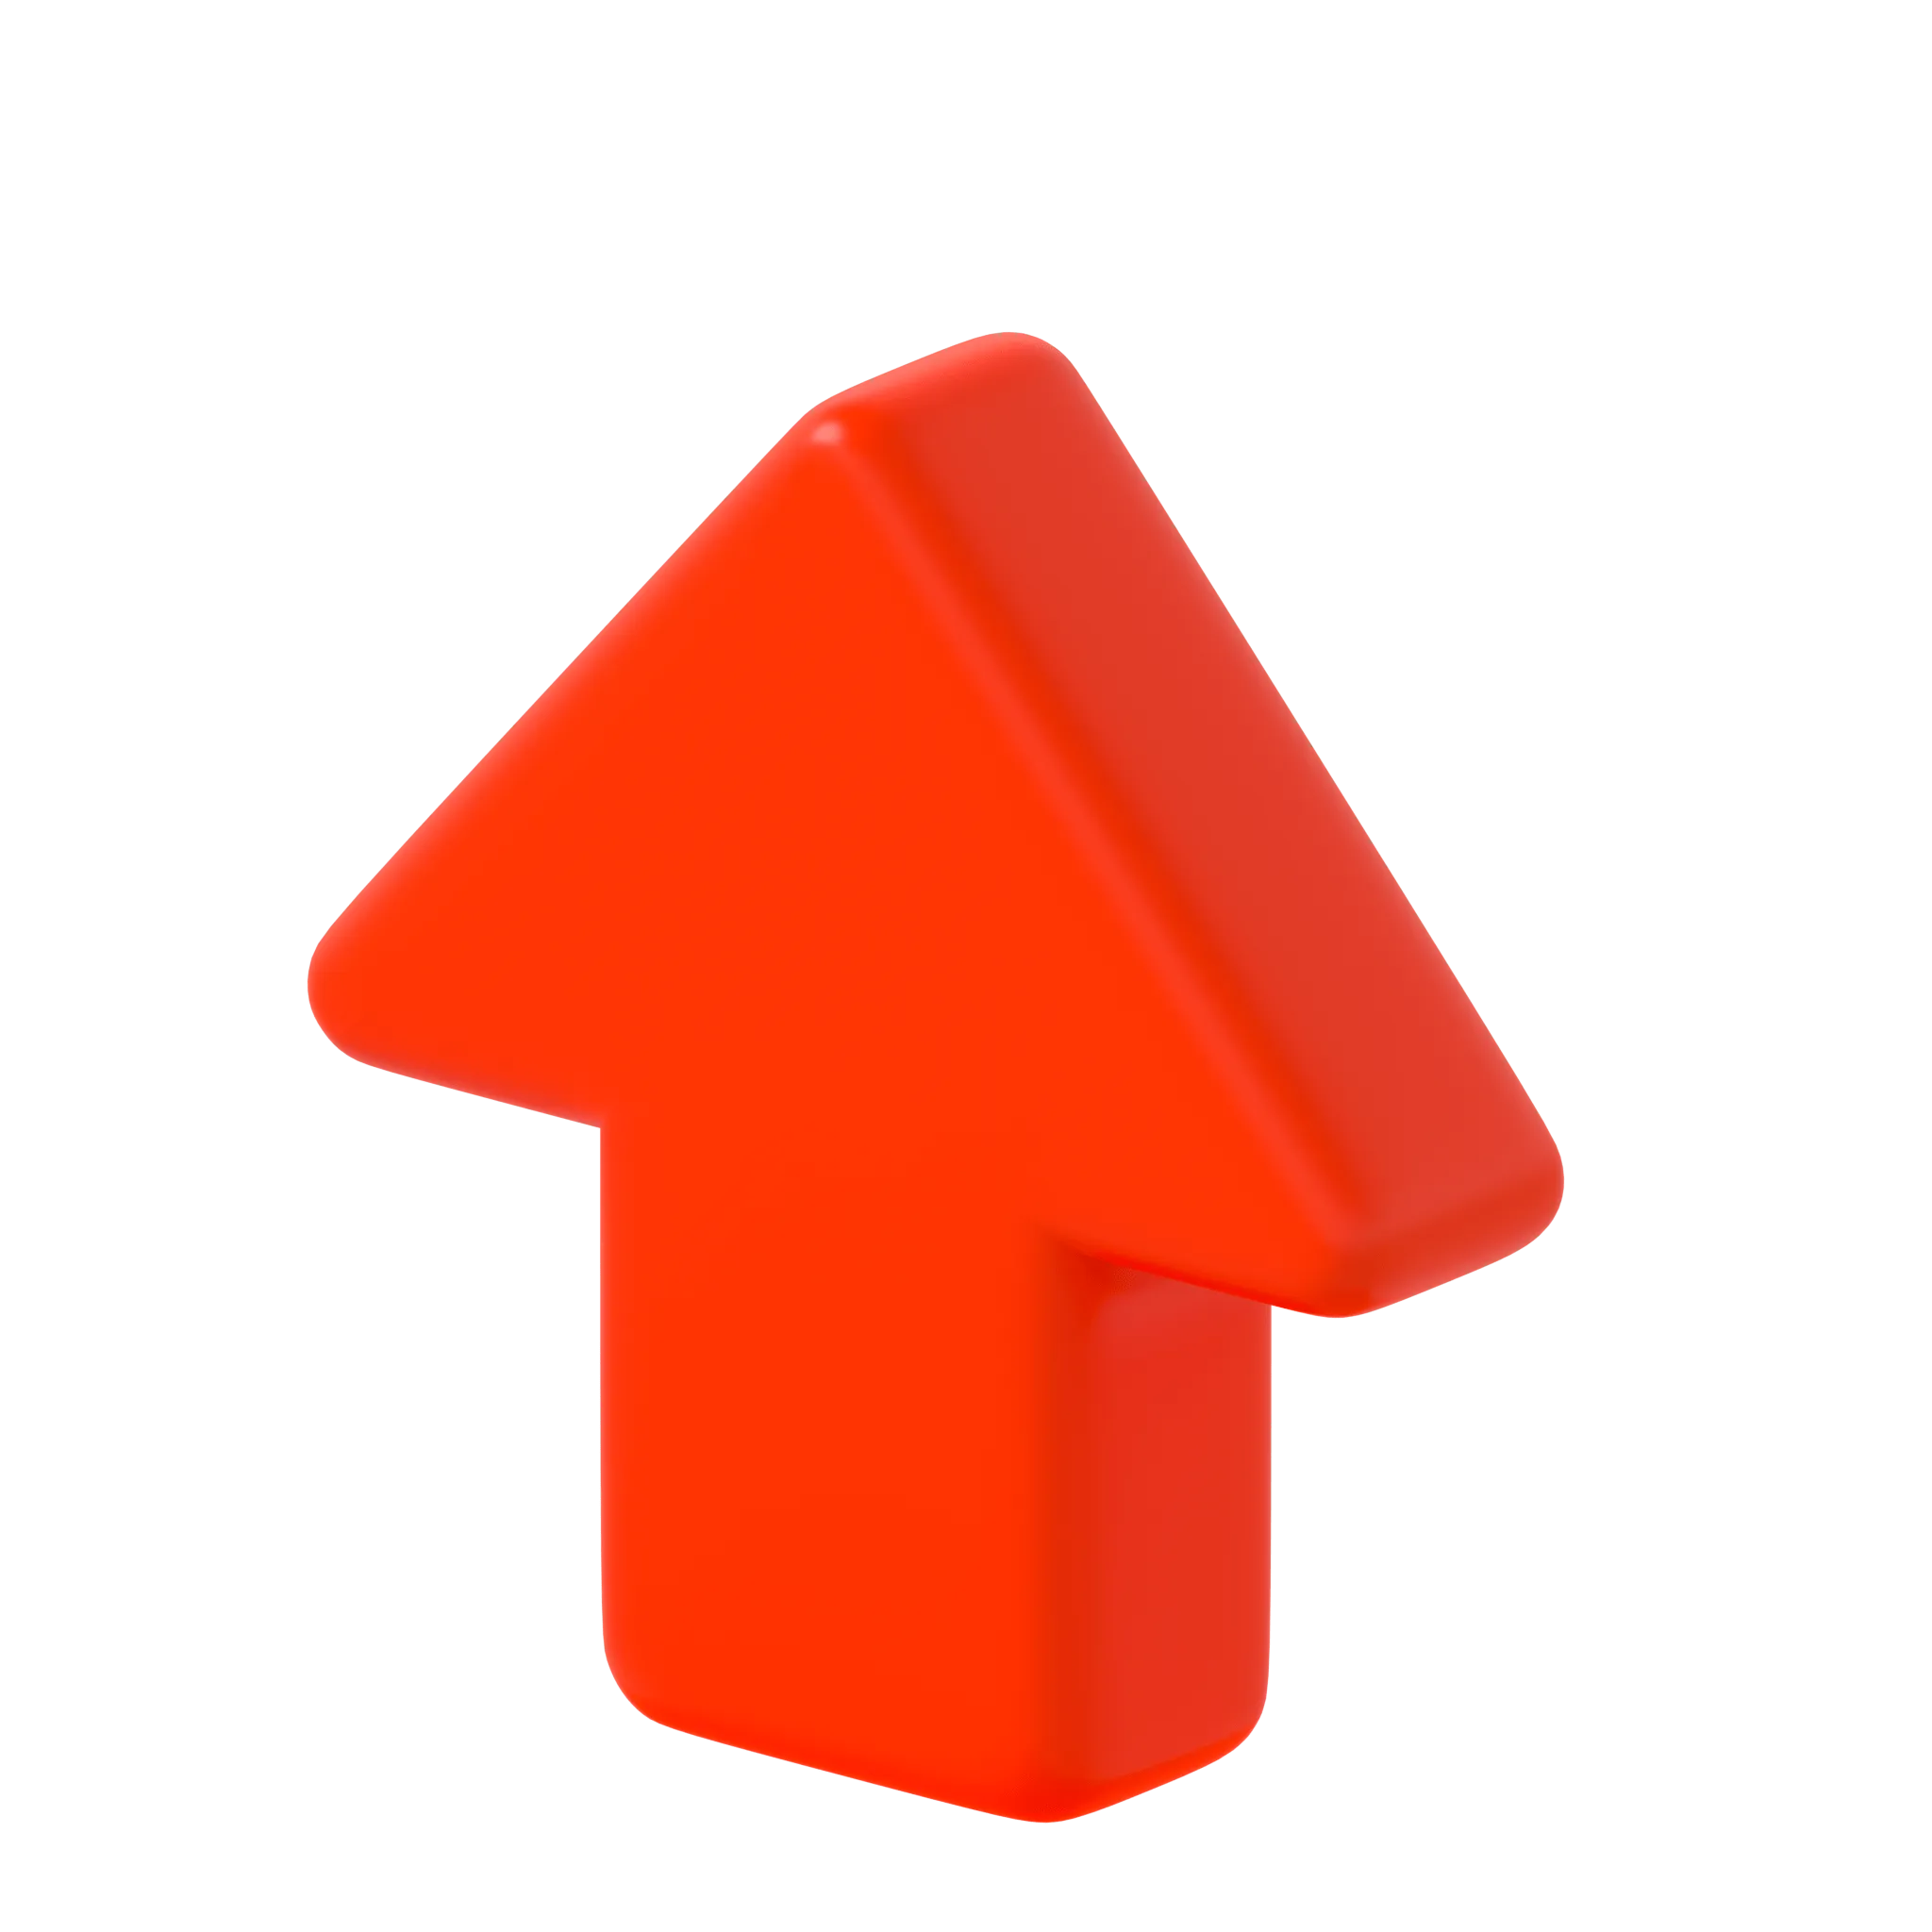 A 3D orange-red up arrow icon.